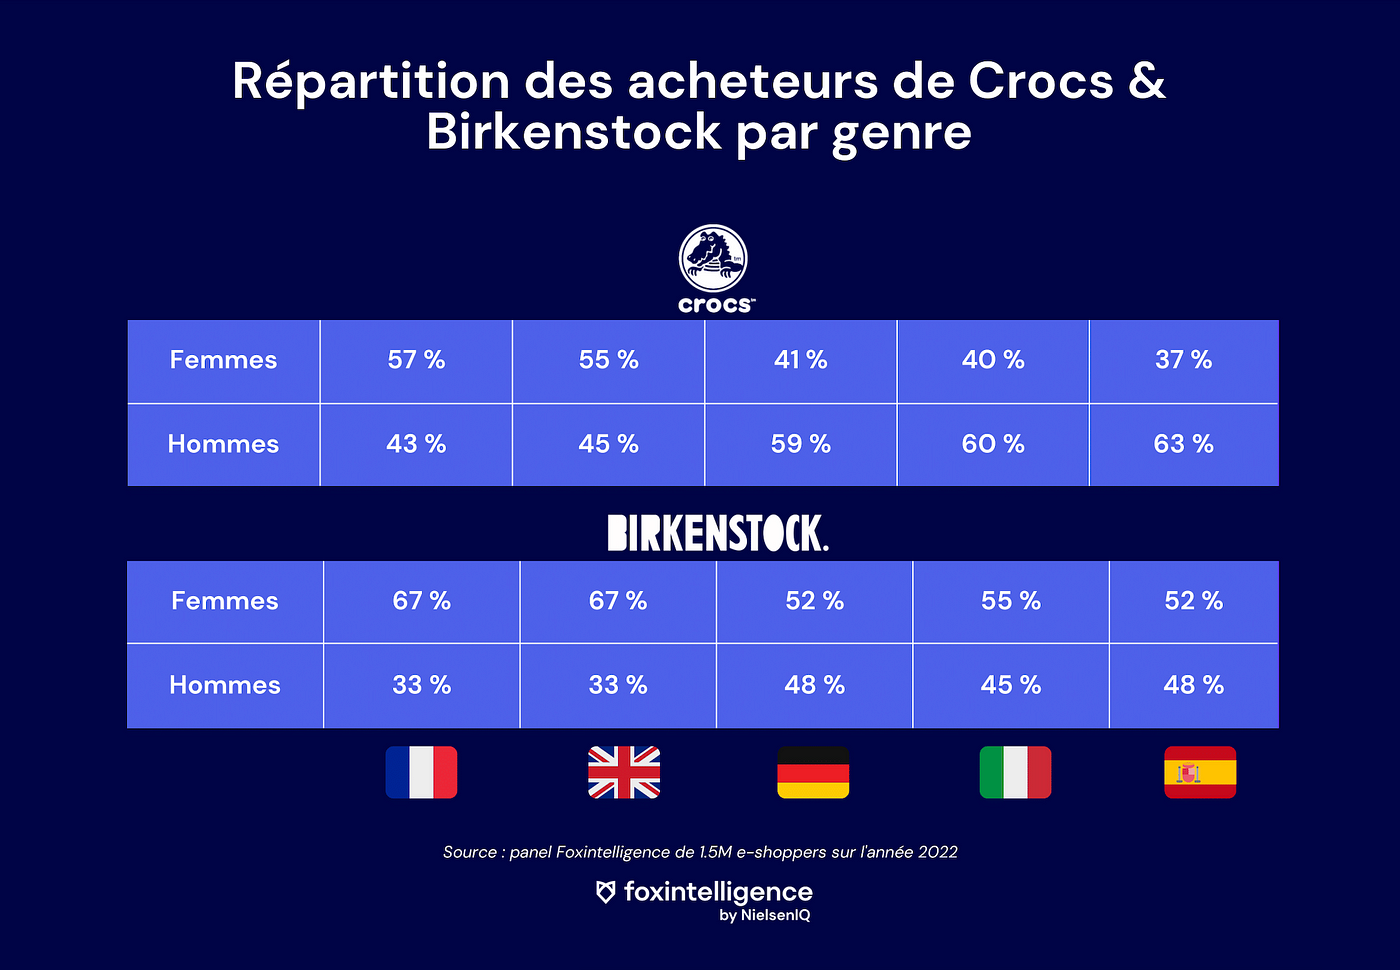 Birkenstock & Crocs, des best-sellers inattendus | by Morgane Caroline |  Foxintelligence | Medium